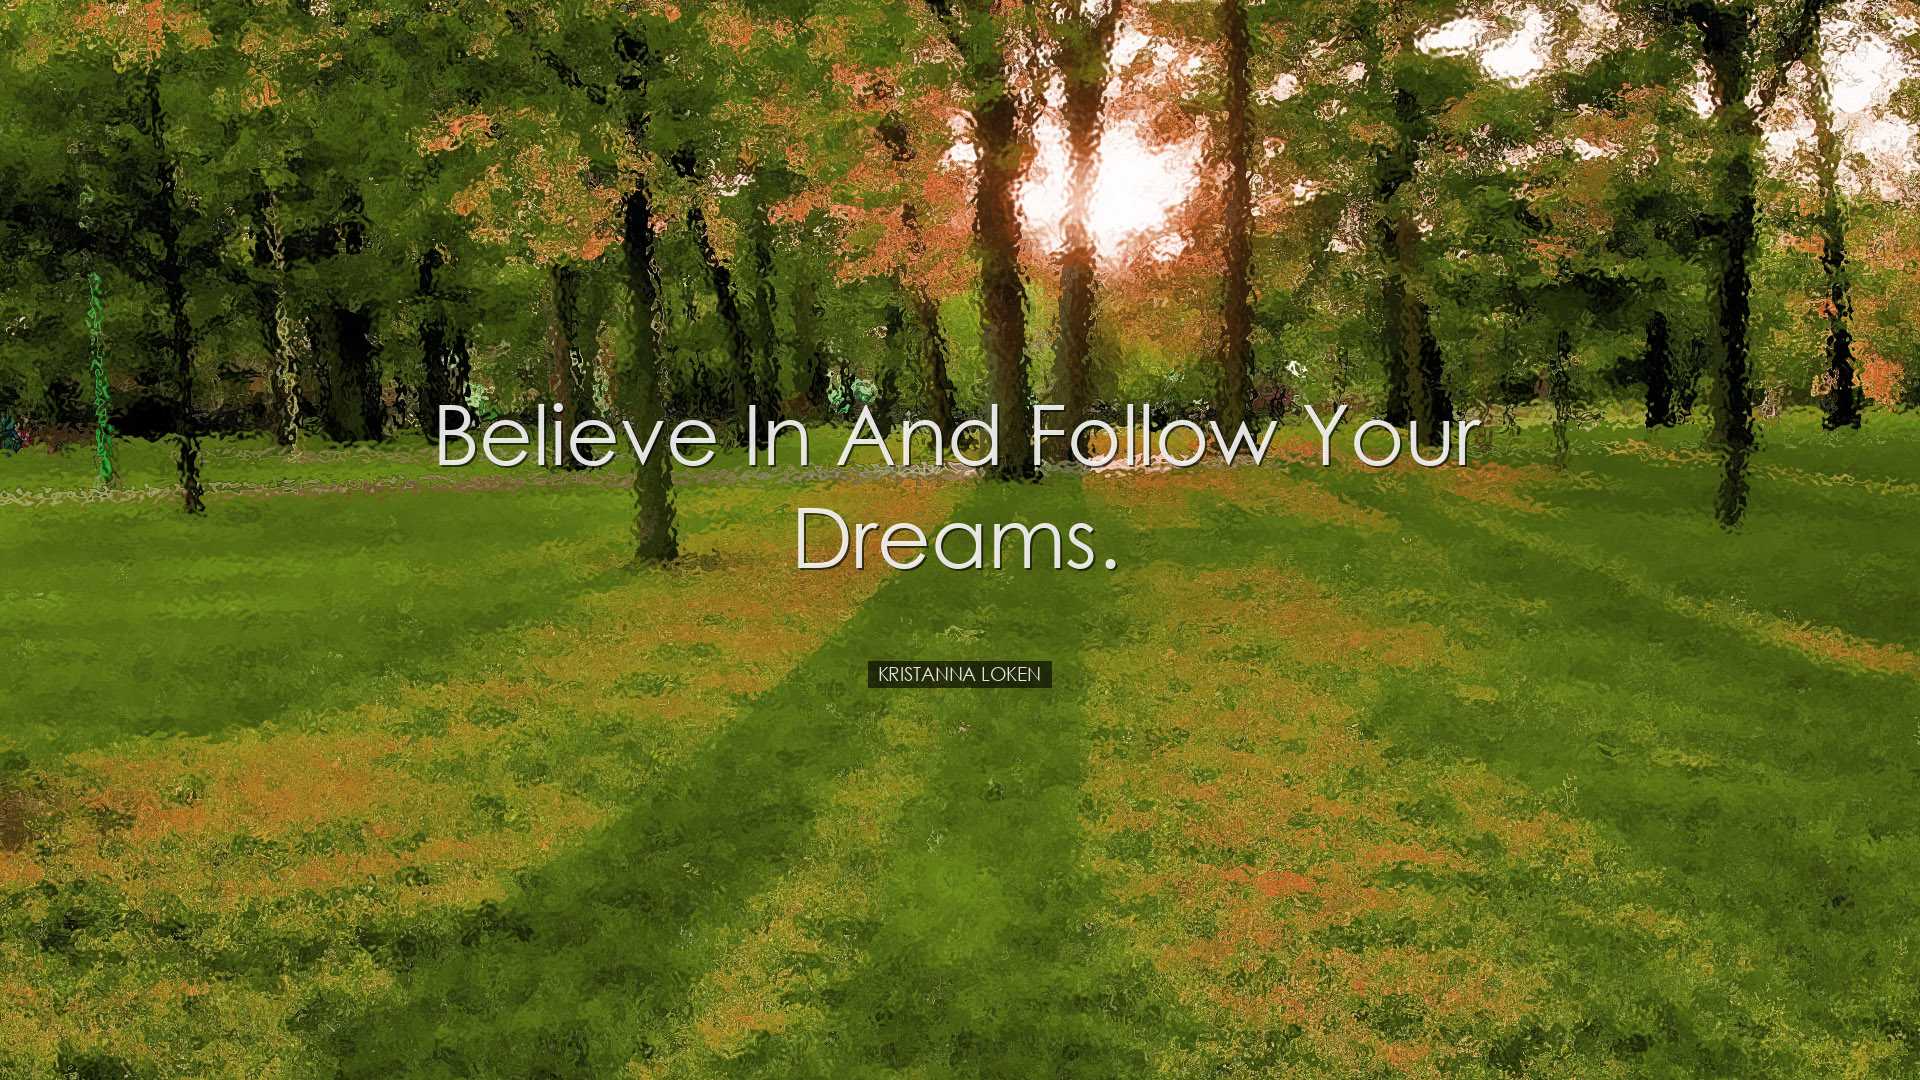 Believe in and follow your dreams. - Kristanna Loken